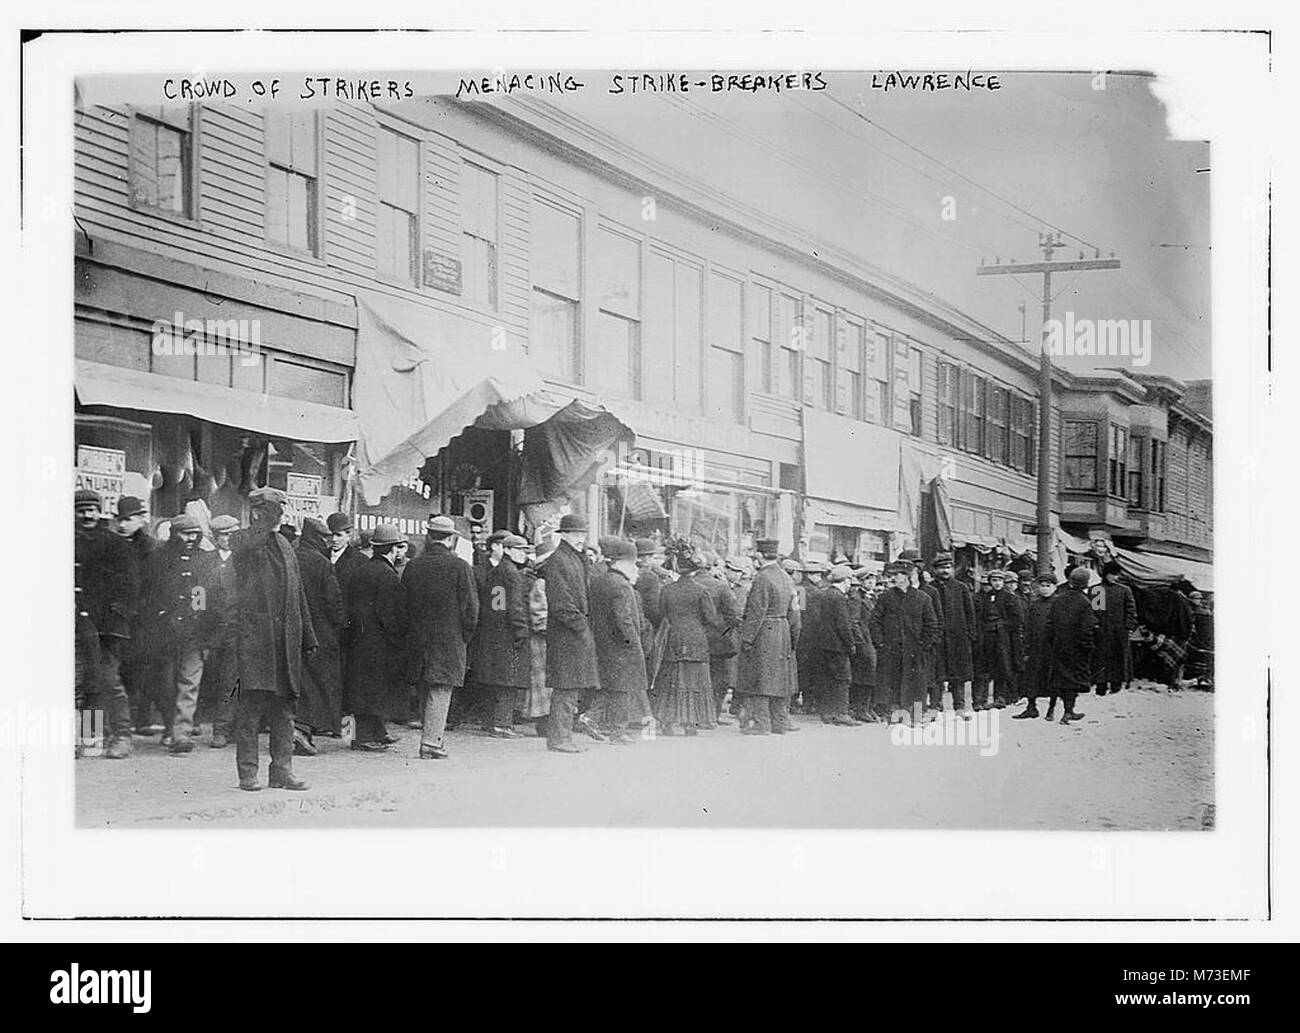 Crowd of strikers menacing strike-breakers, Lawrence LCCN2014690134 Stock Photo